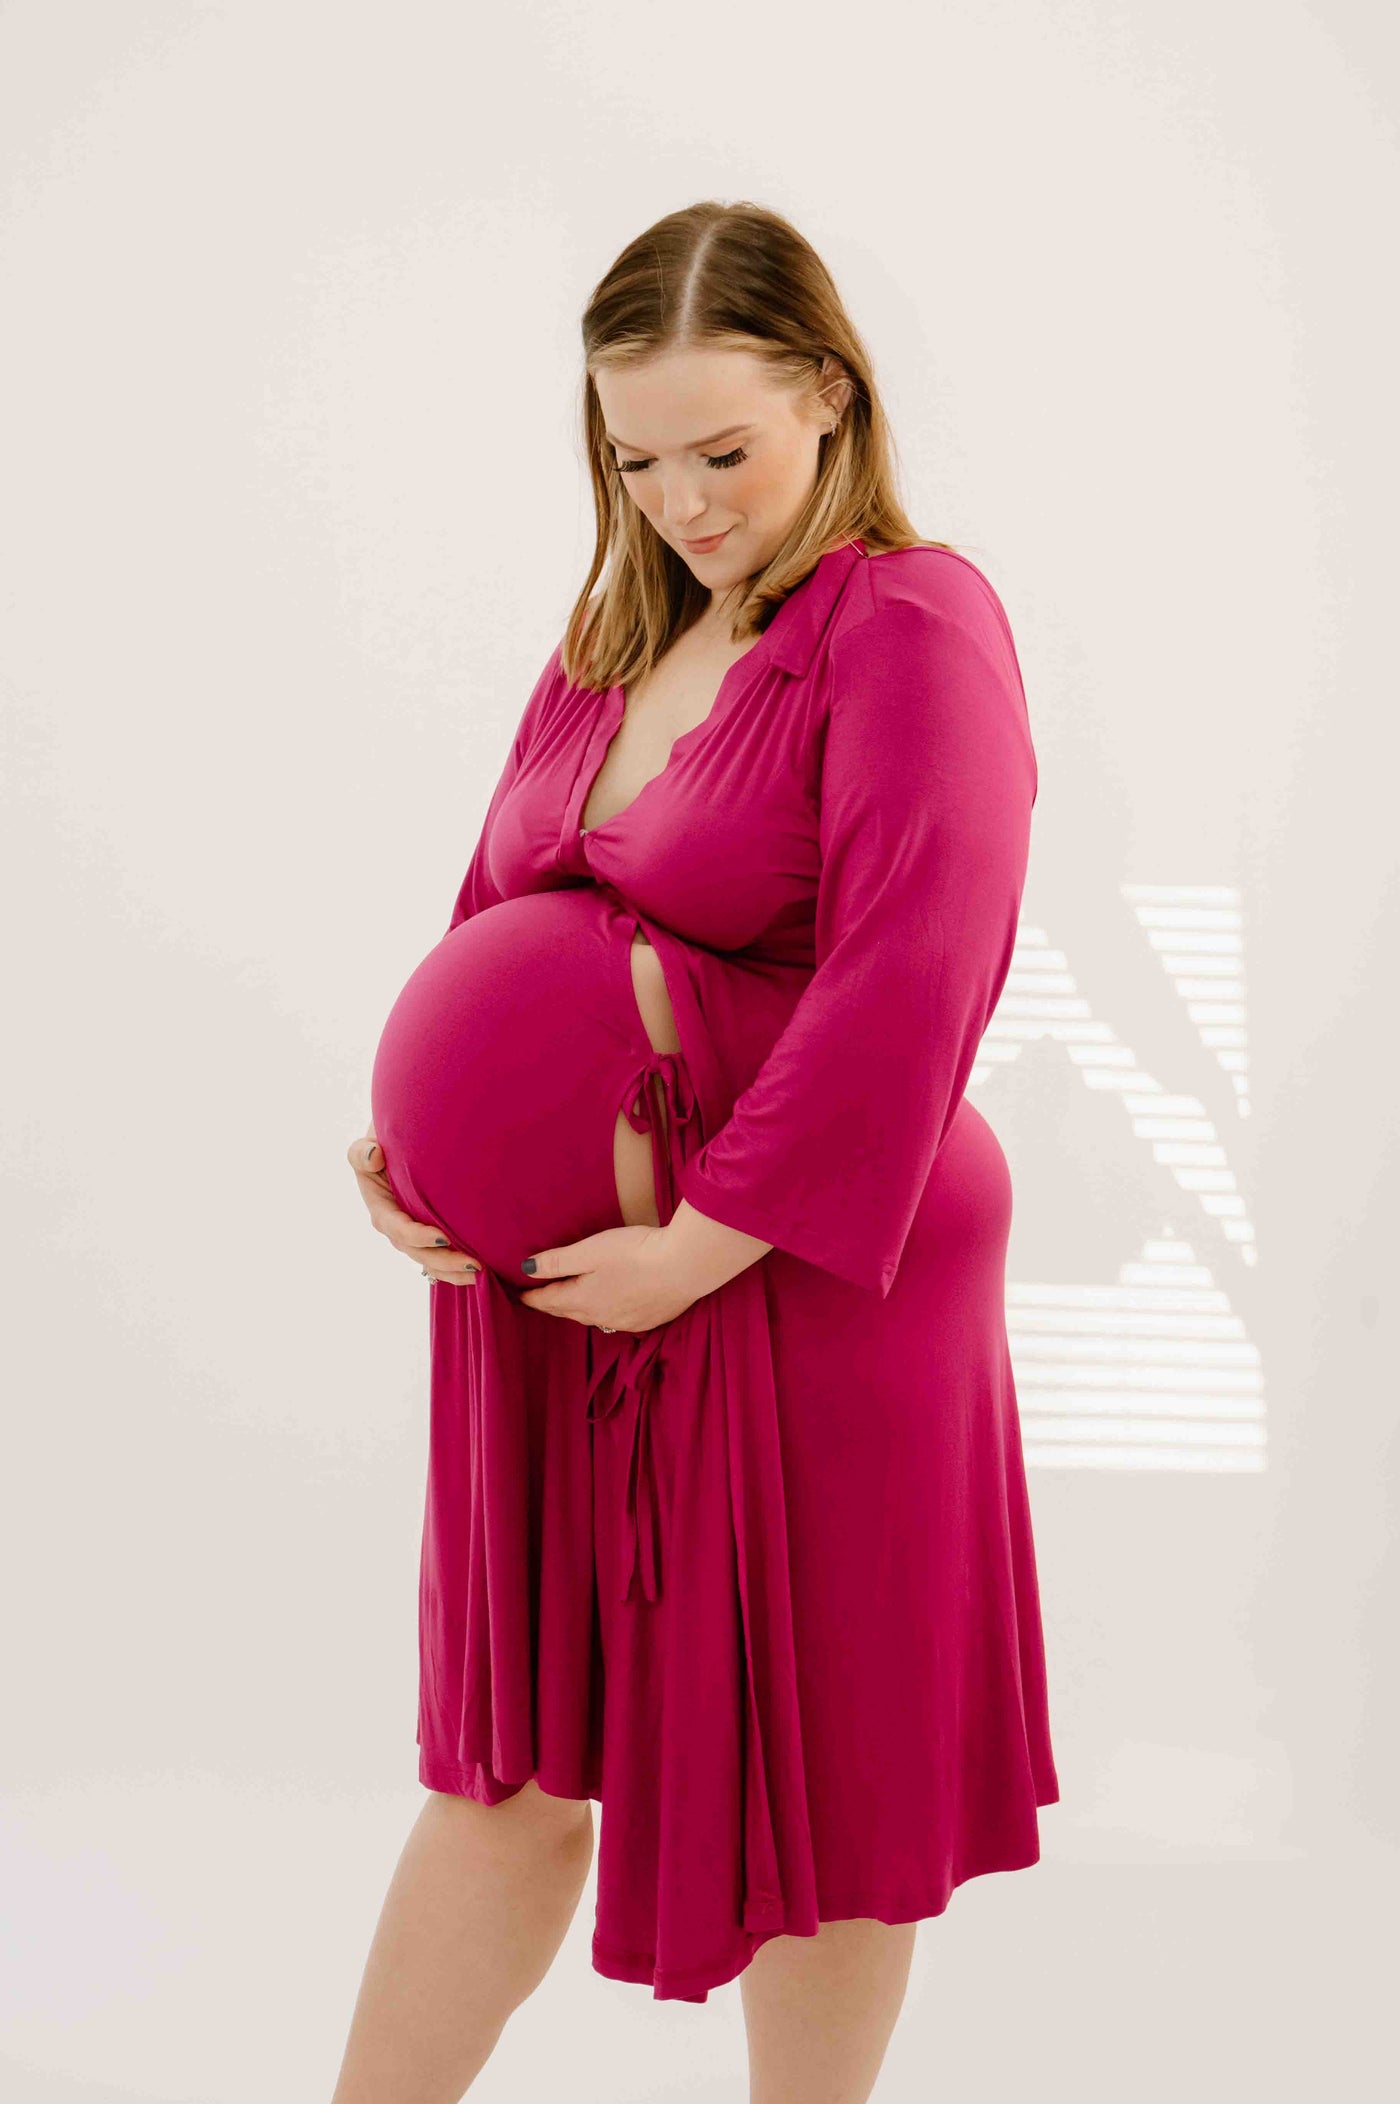 Lila Labor & Postpartum Gown in Raspberry